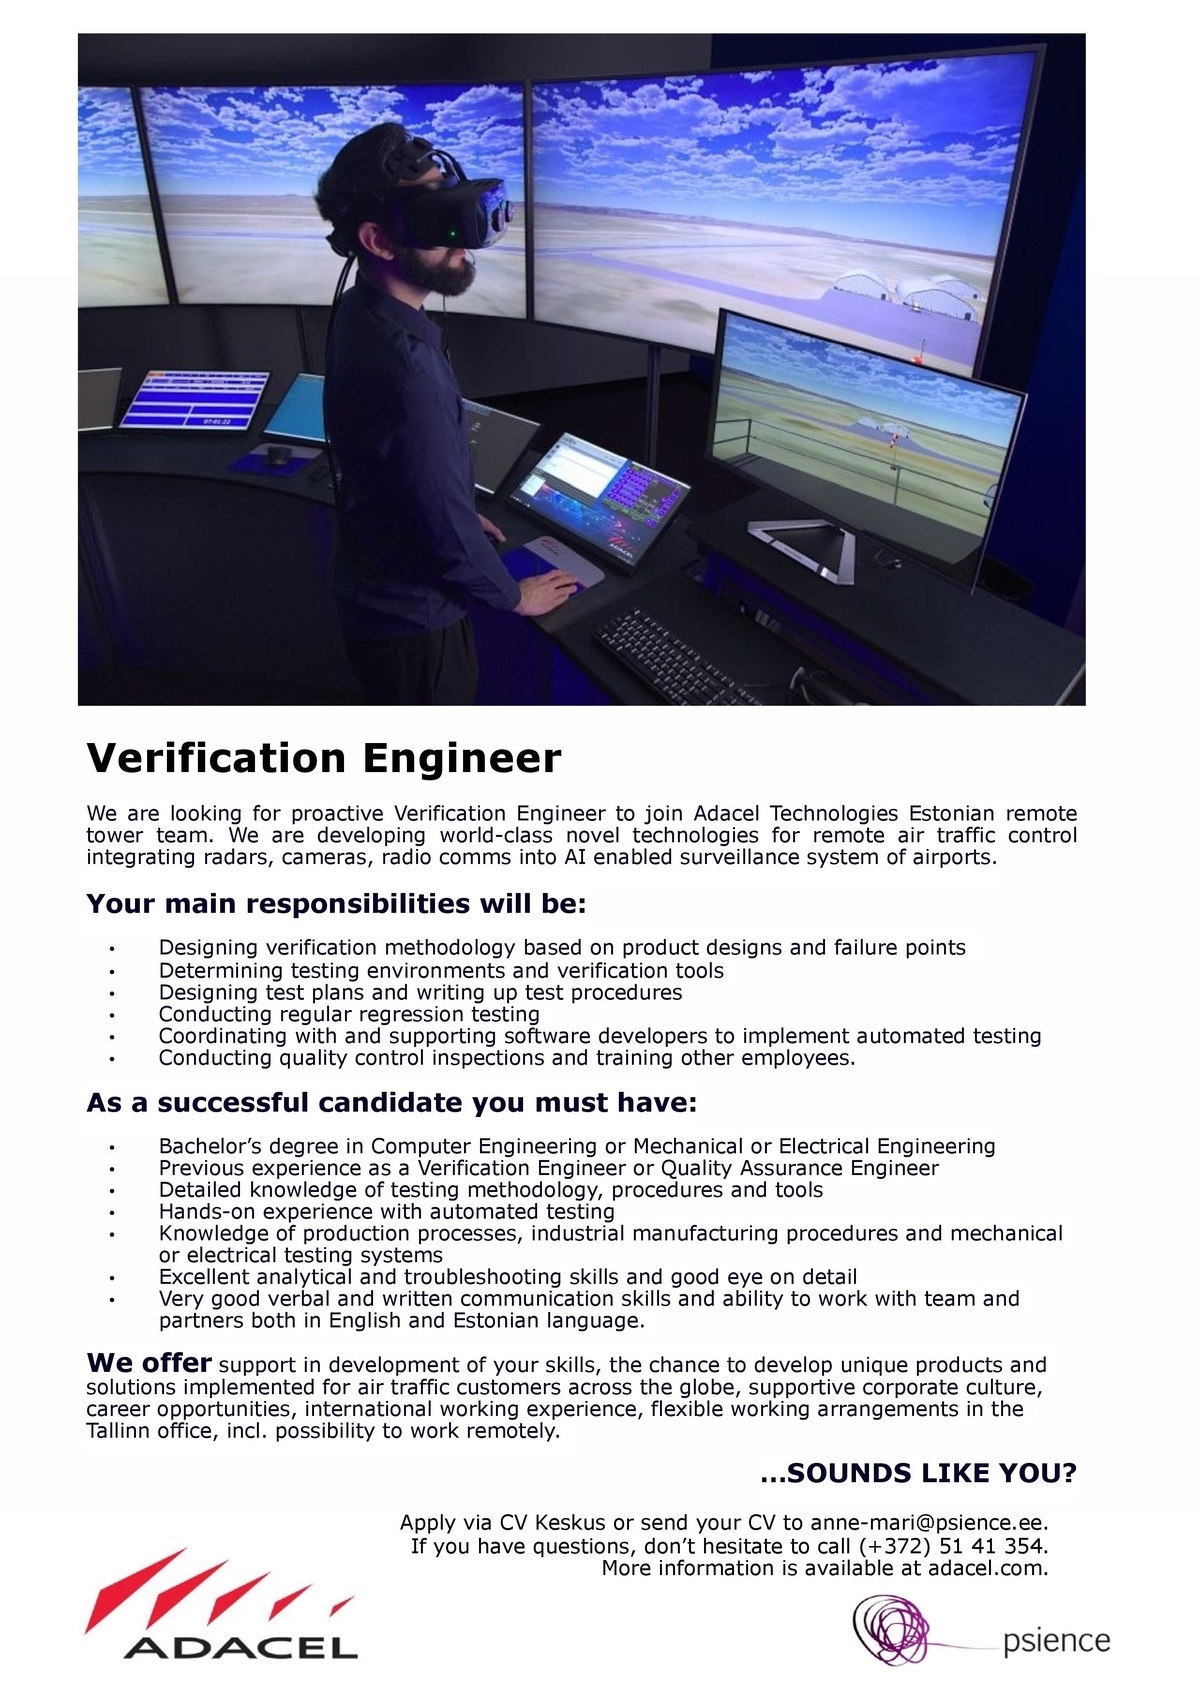 Adacel Technologies Estonia Verification Engineer